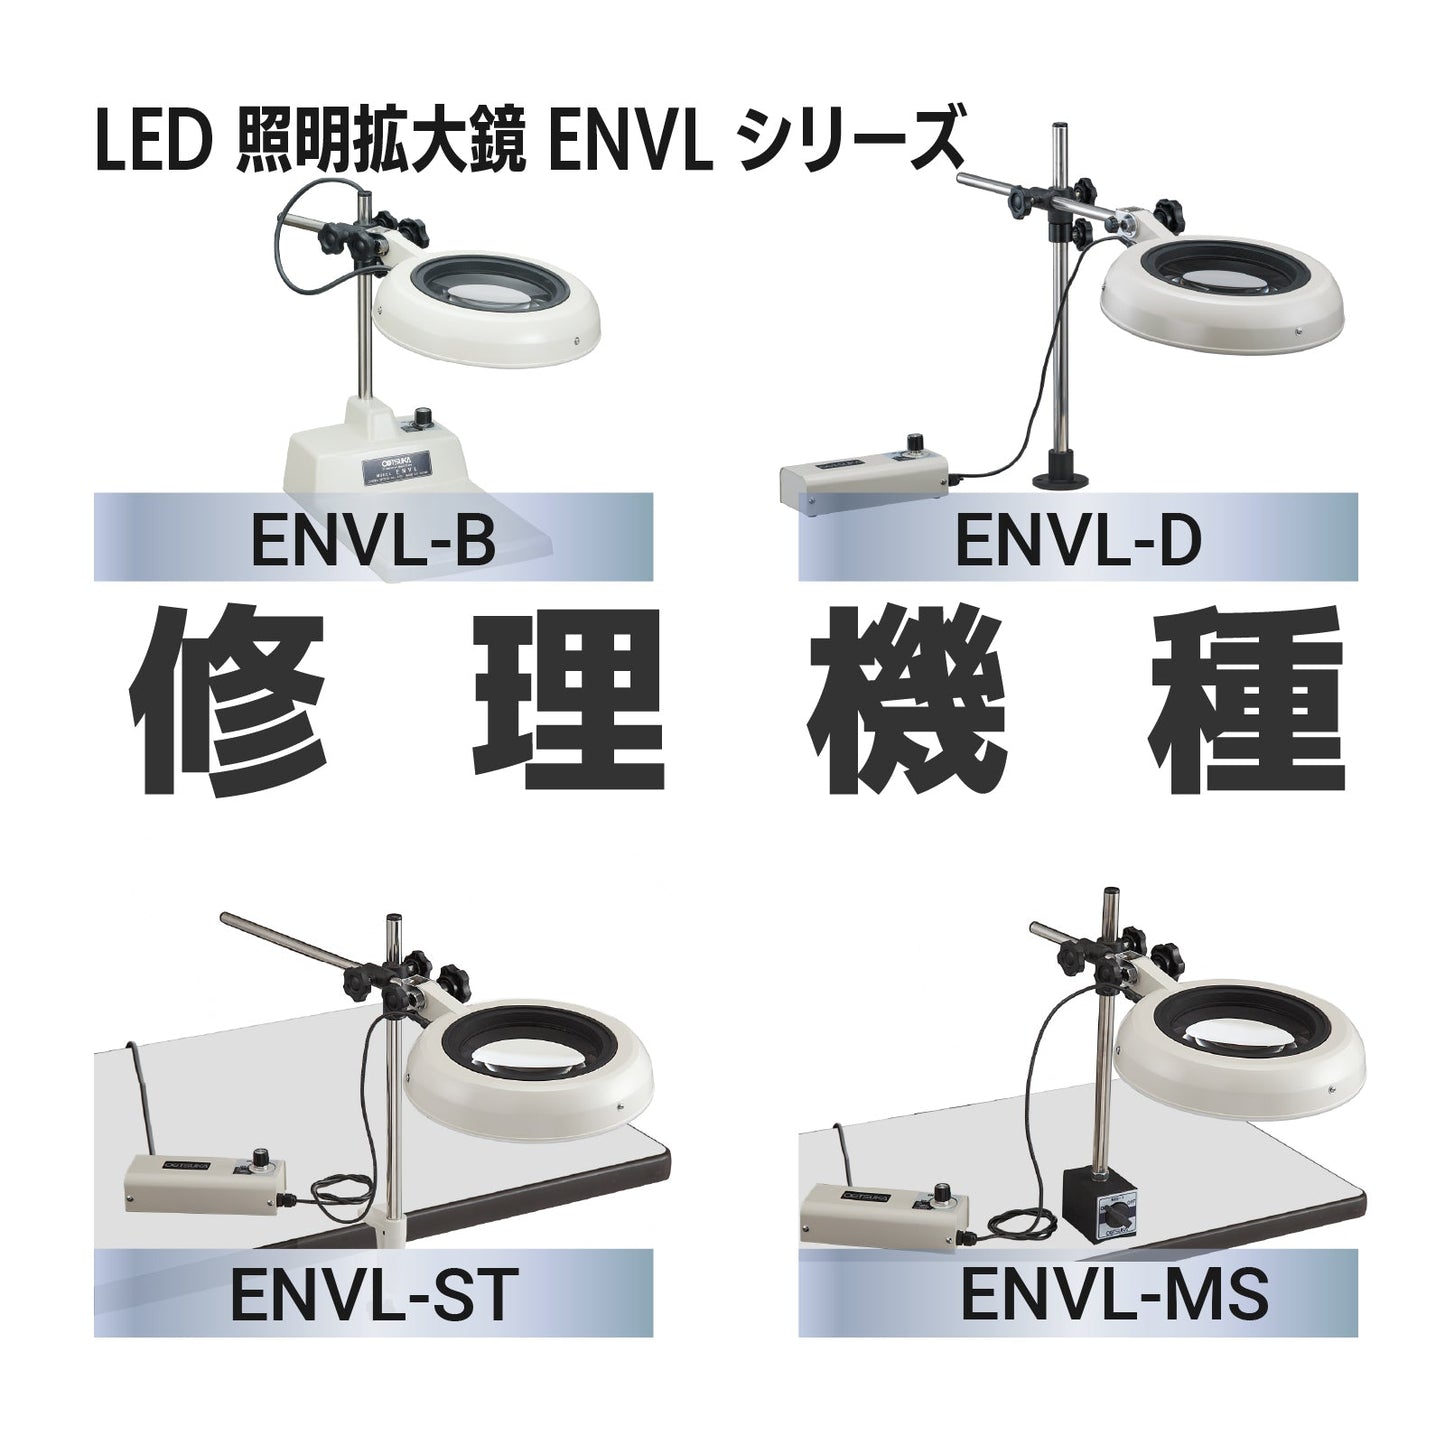 ENVL series: ENVL-B, D, ST, MS